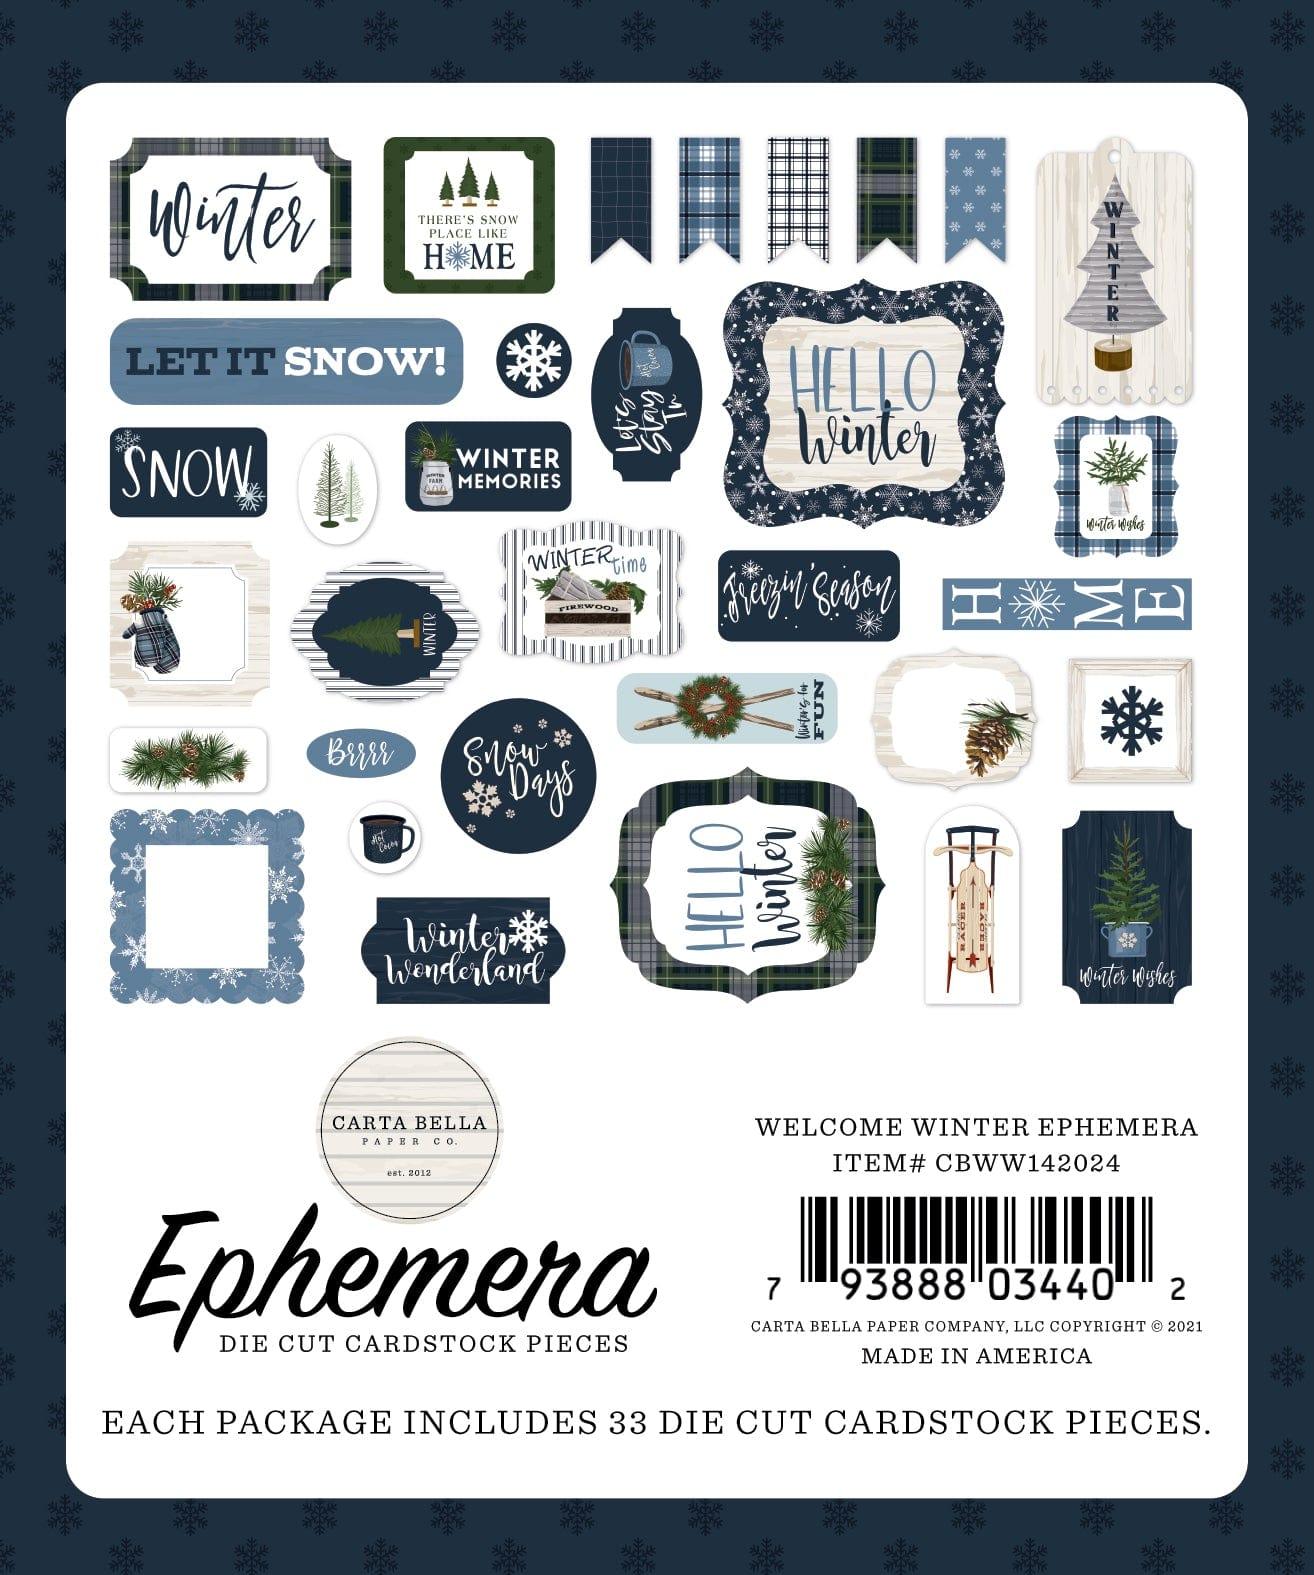 Welcome Winter Collection 5 x 5 Scrapbook Ephemera Die Cuts by Carta Bella - Scrapbook Supply Companies